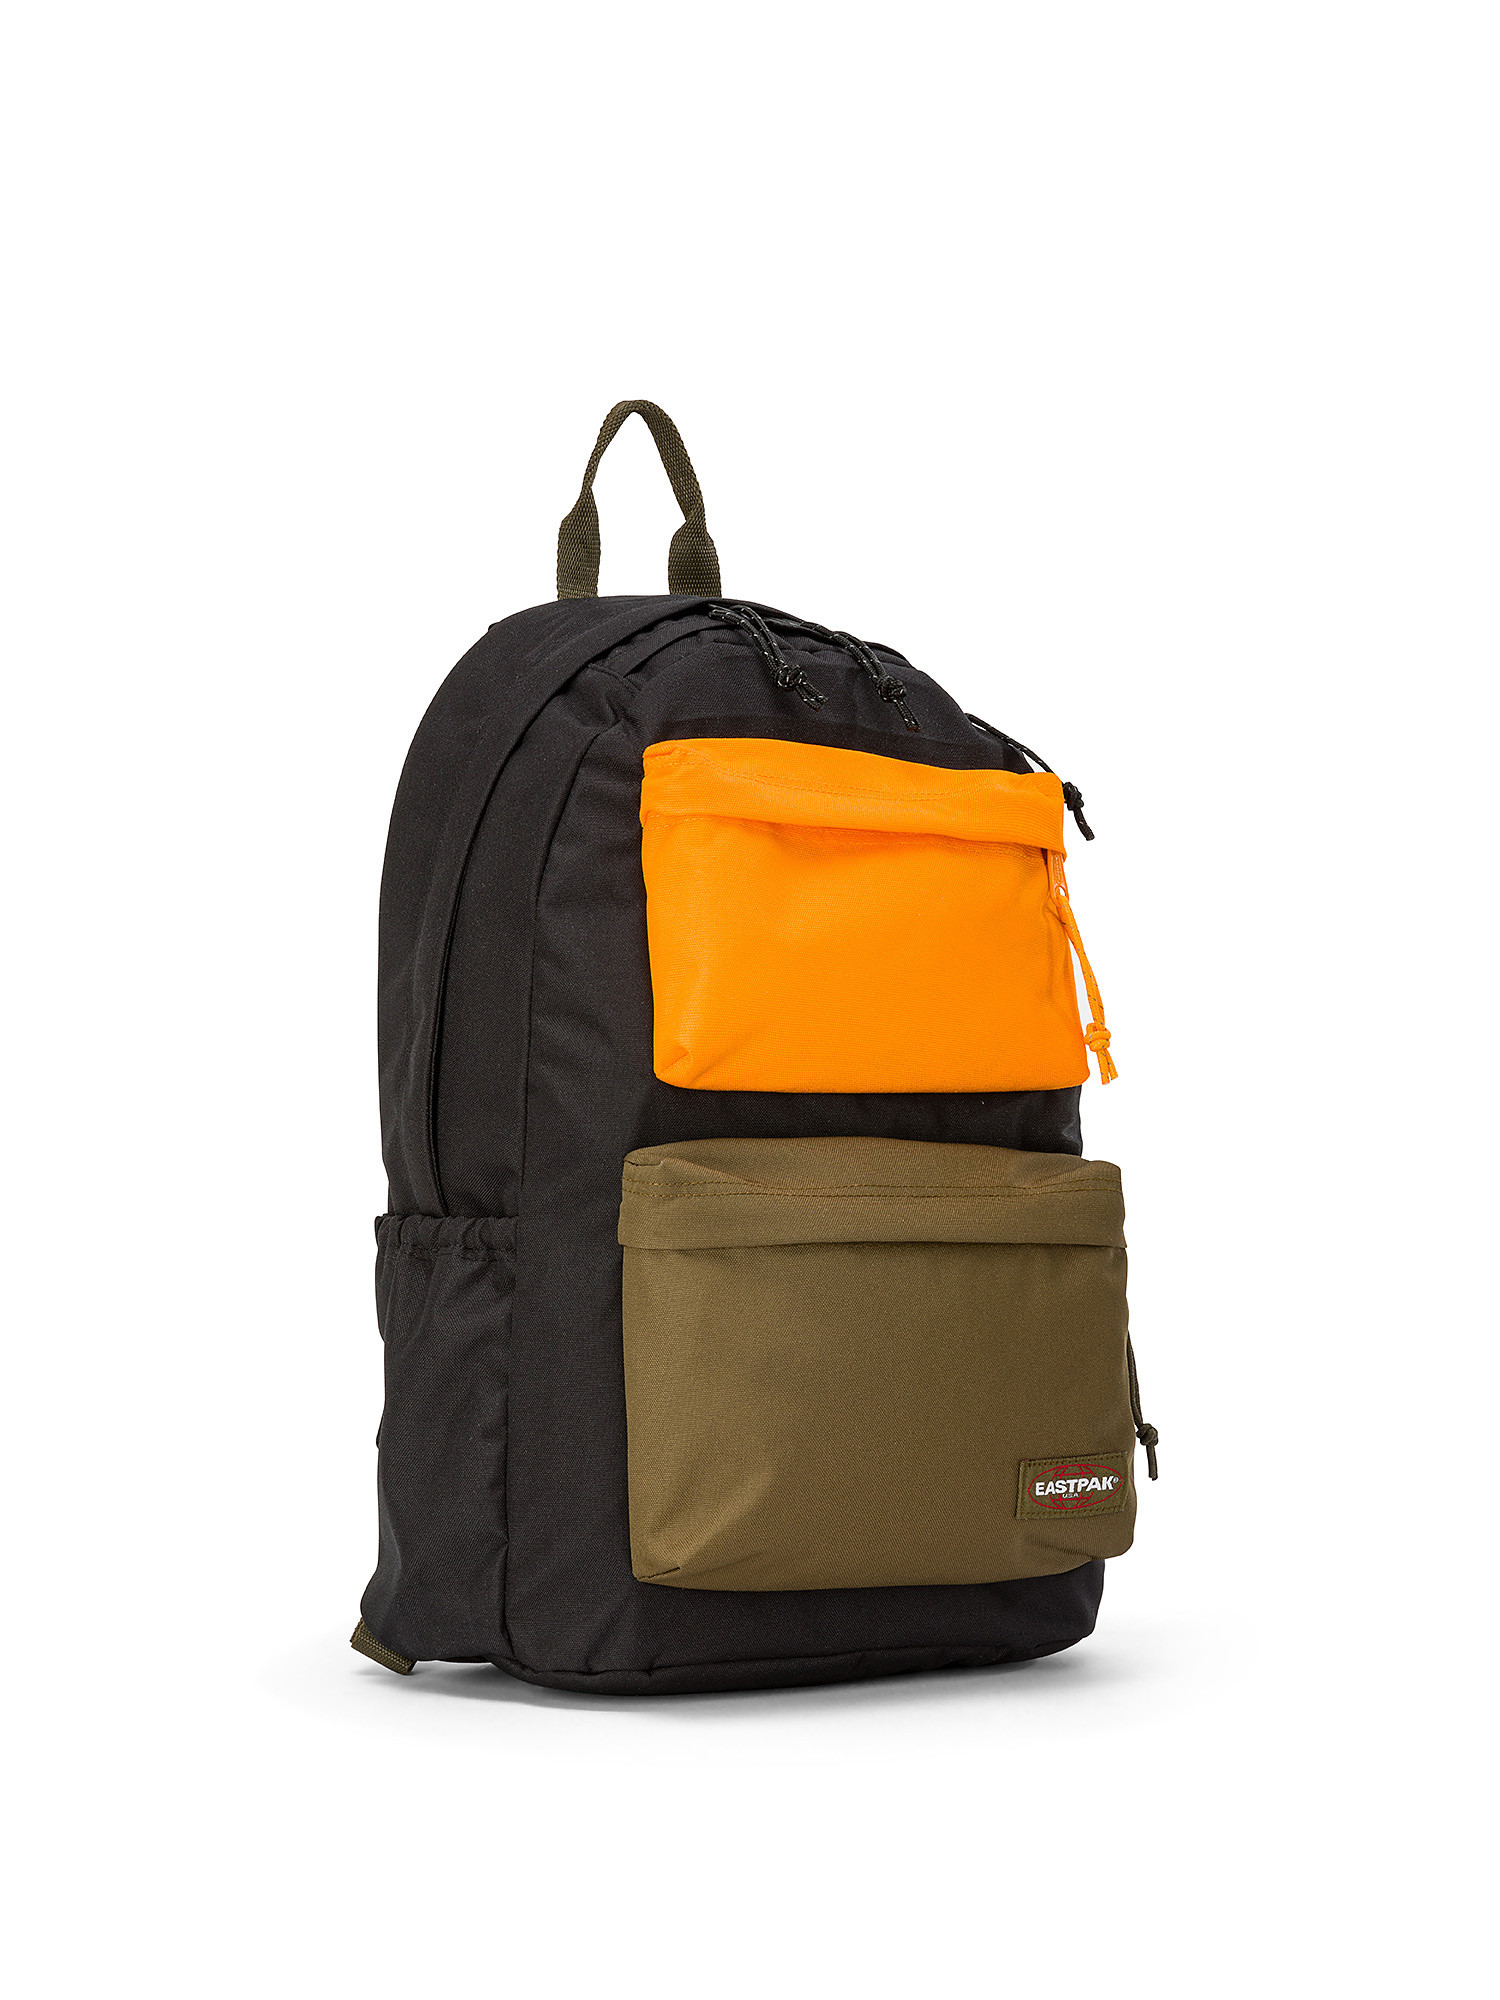 Eastpak - Padded Double Casual Blocked Backpack, Black, large image number 1